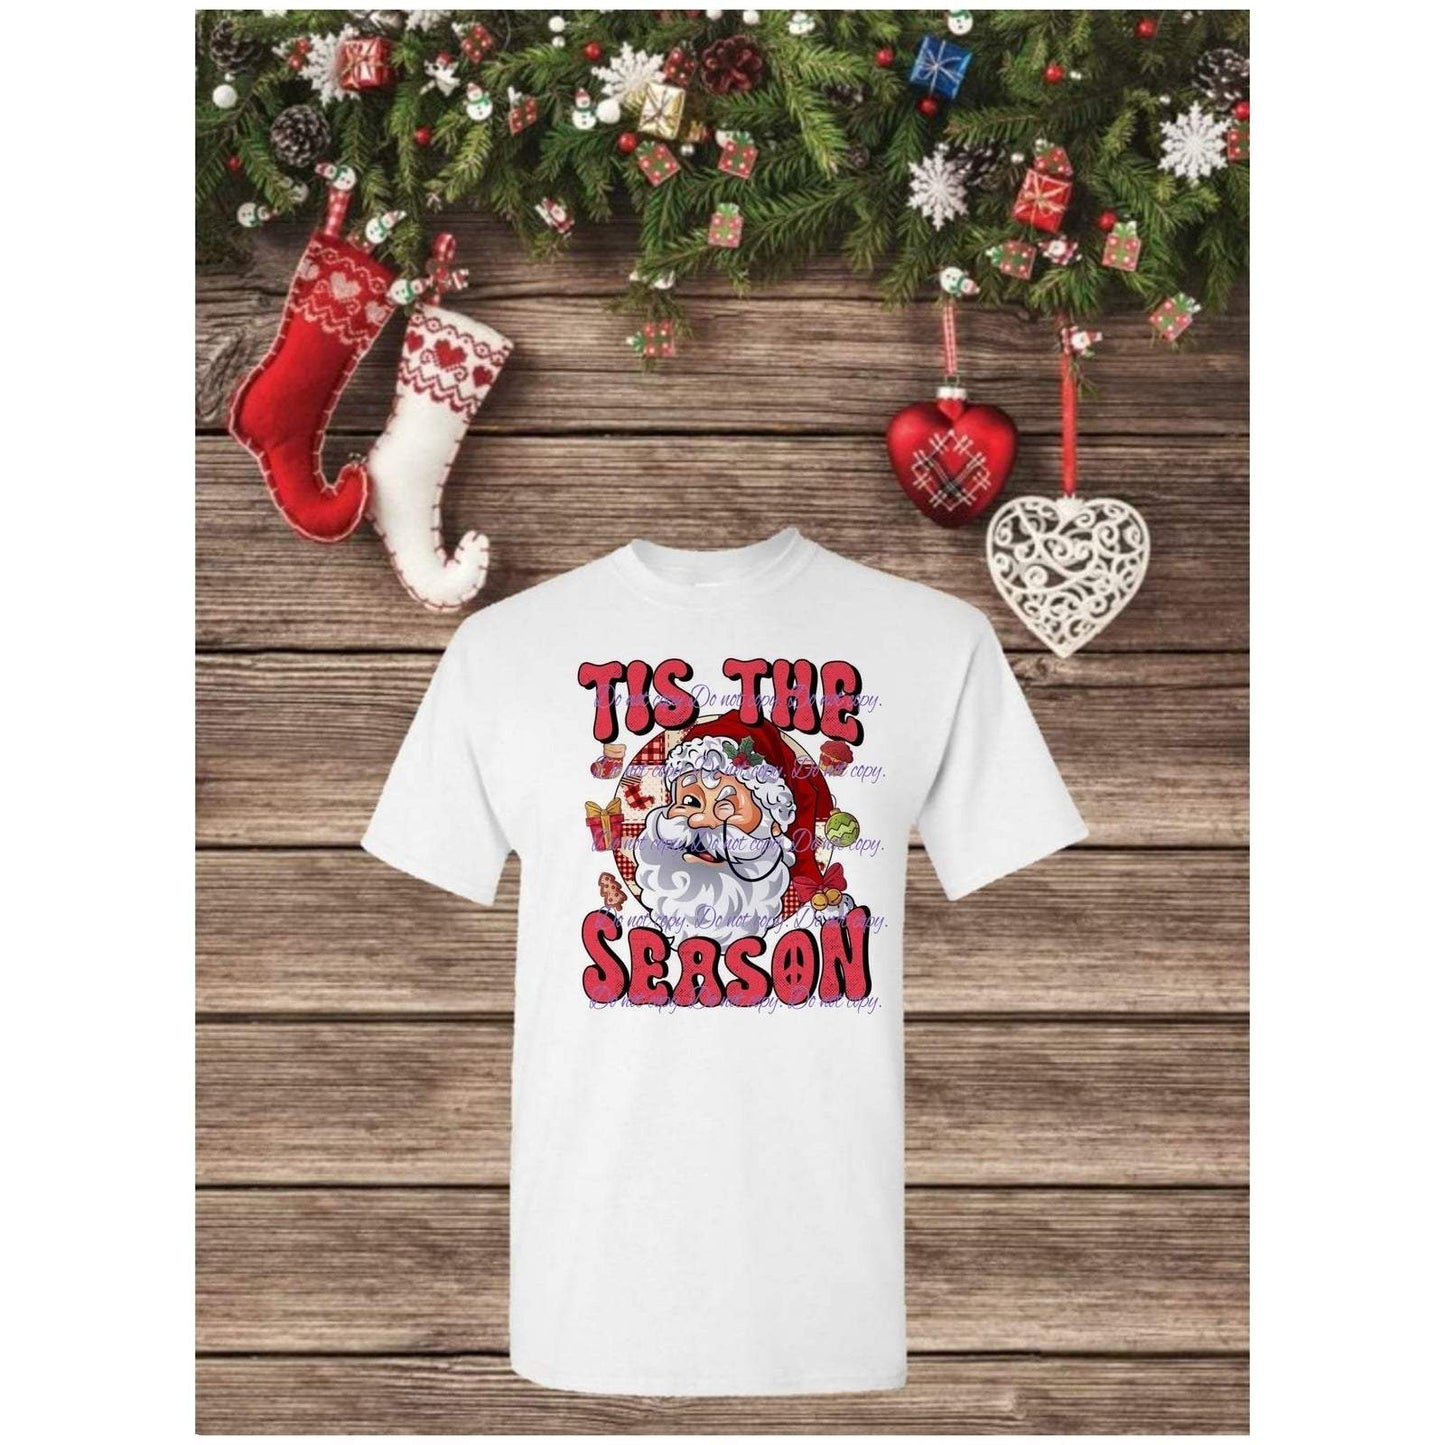 Tis' the season T-Shirt | Christmas Apparel Collection | Pink Innovations, LLC